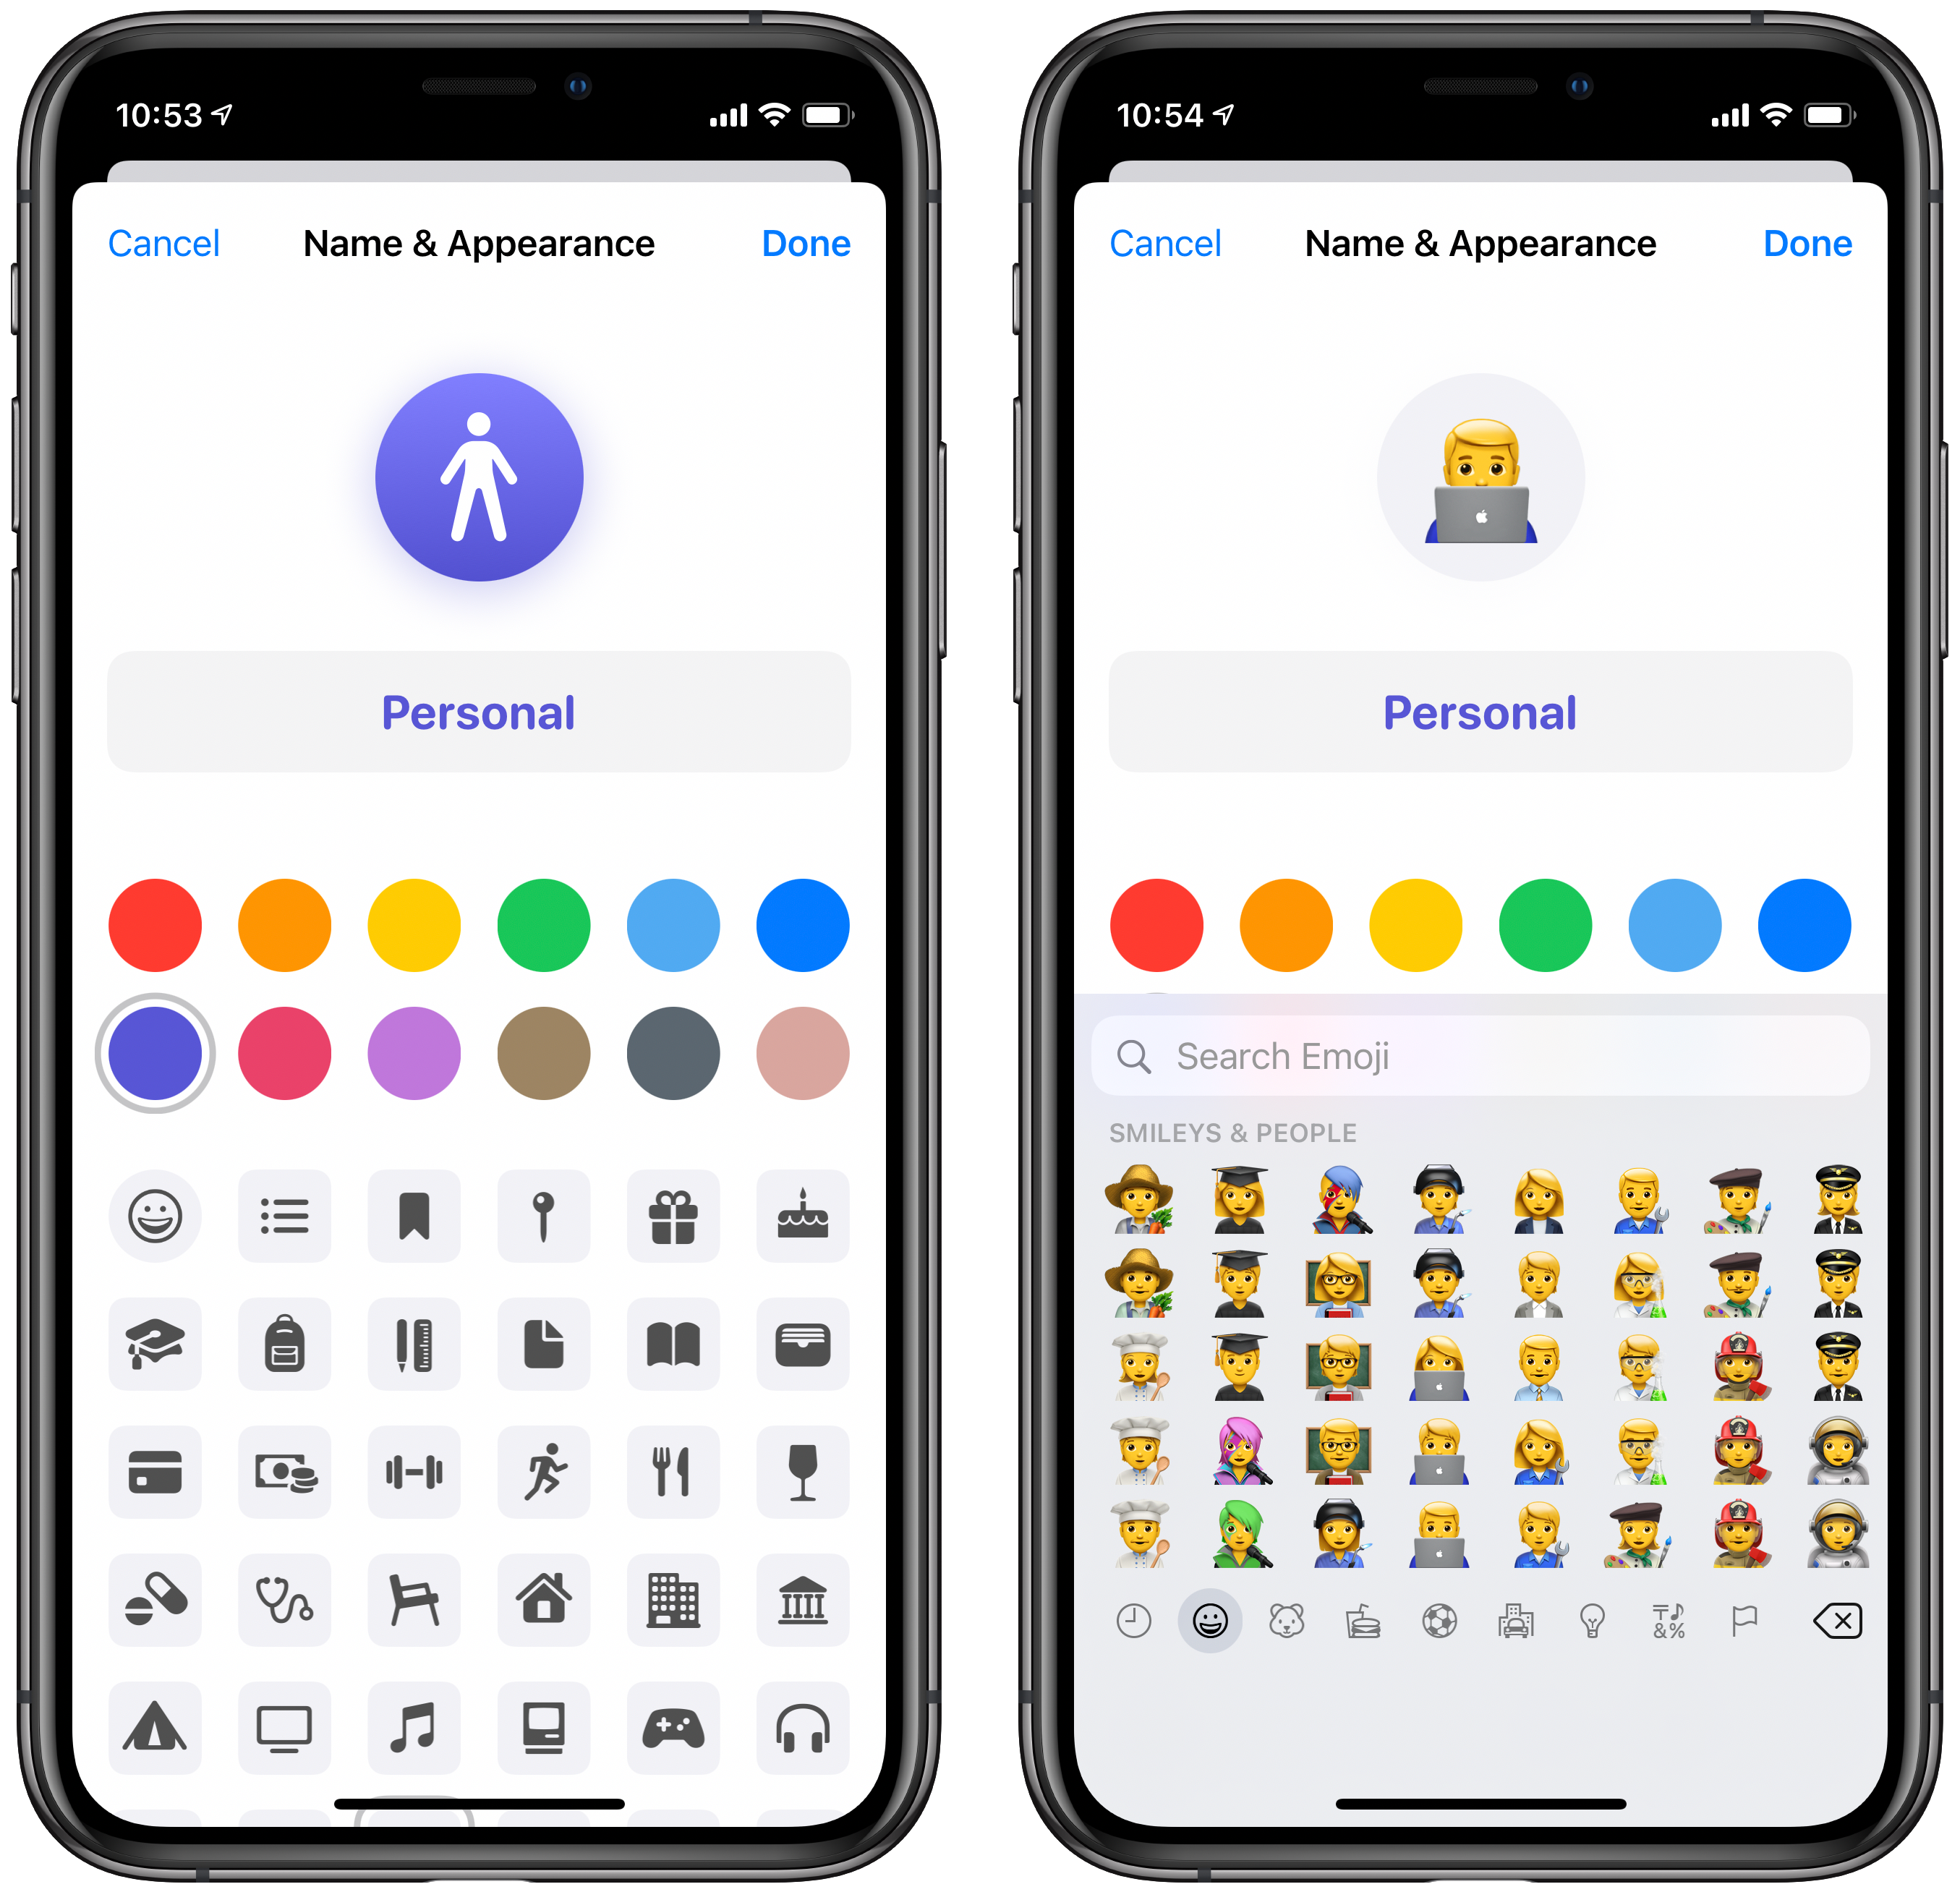 New list icon options, including emoji.